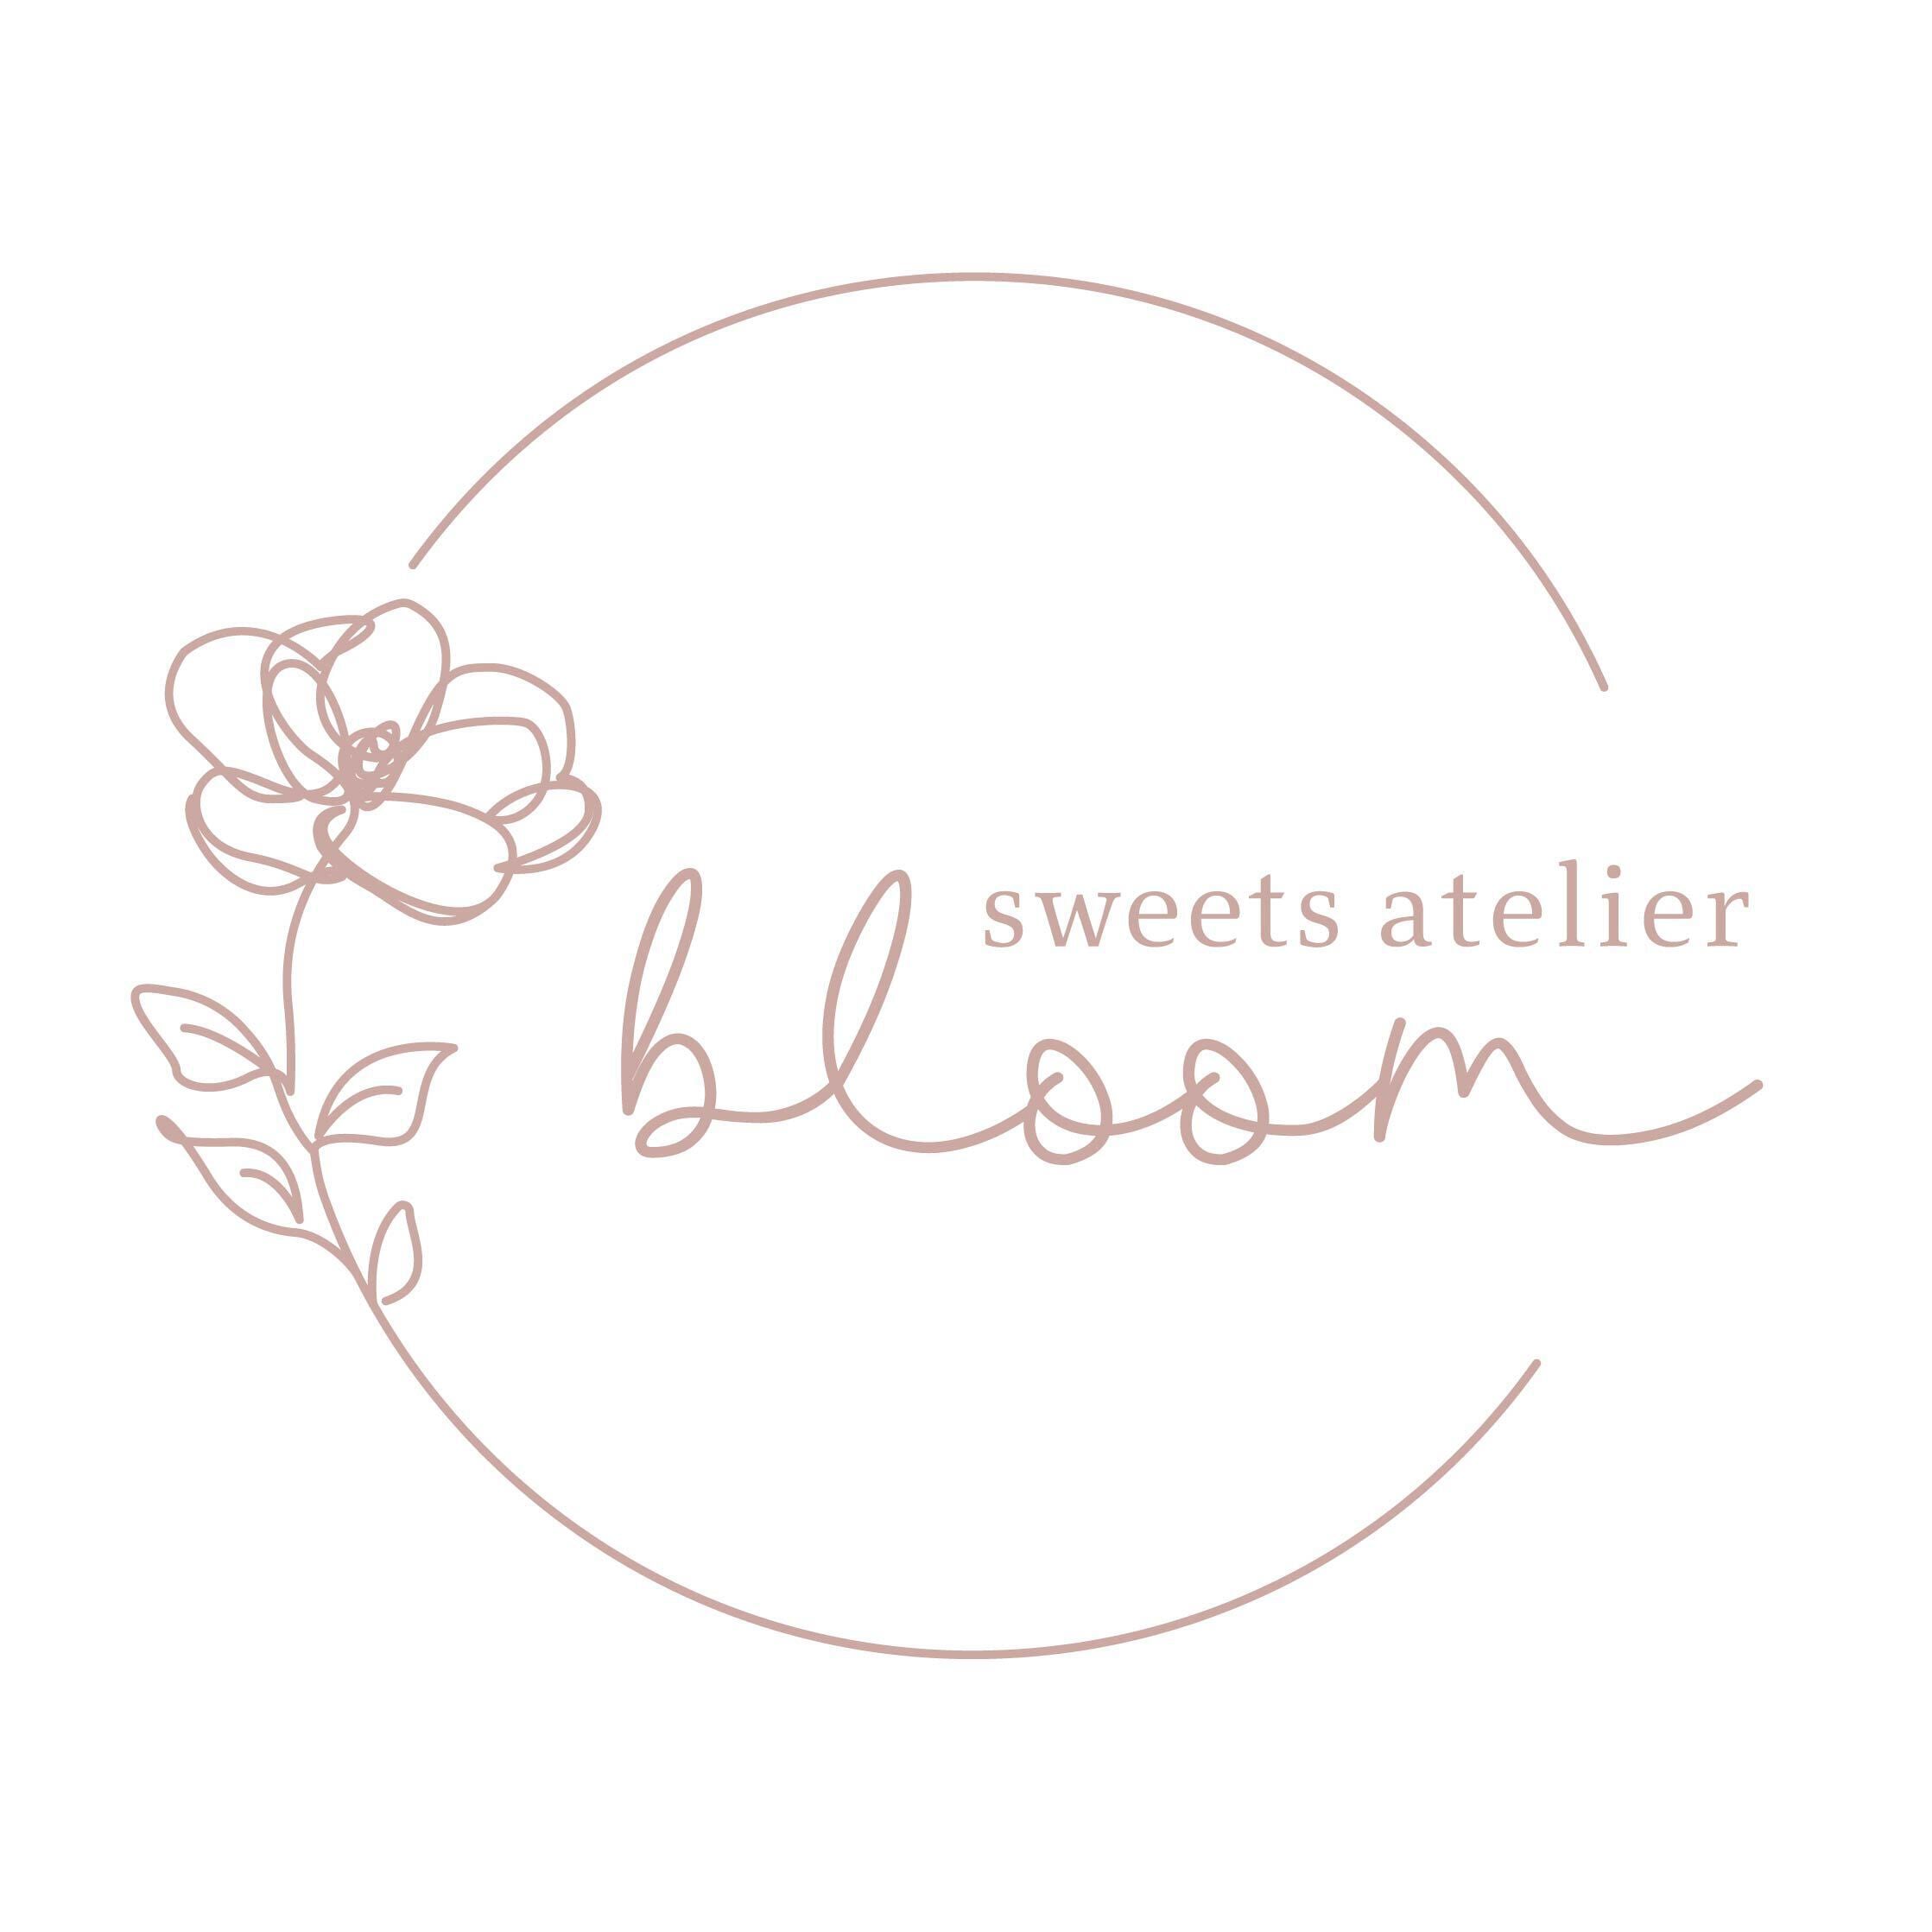 sweets atelier bloom